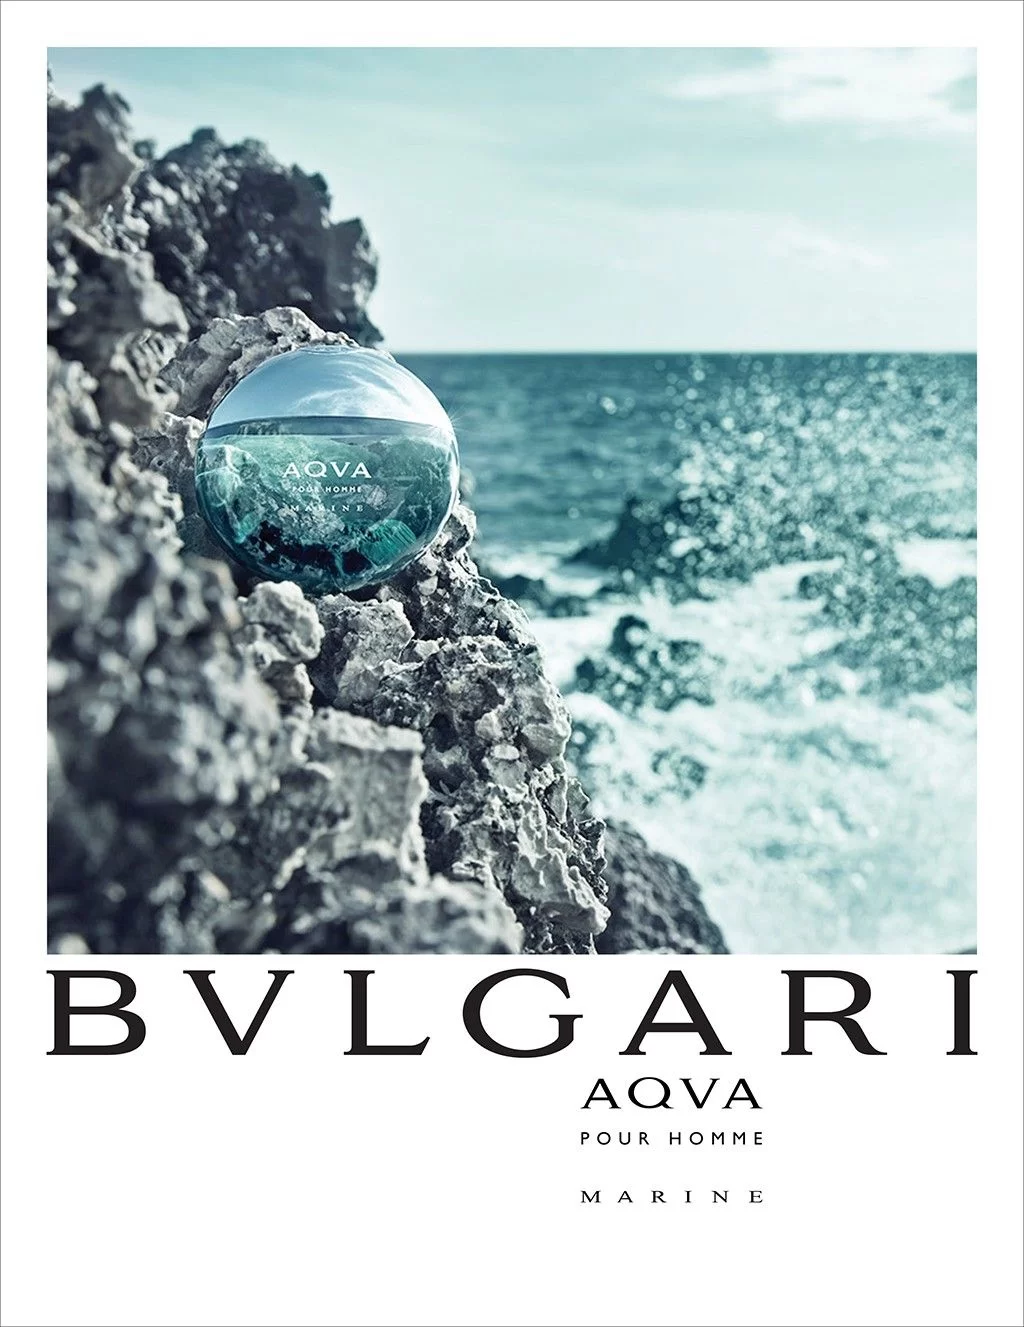 Bvlgari Aqva Marine
The Best Aquatic & Oceanic Perfumes